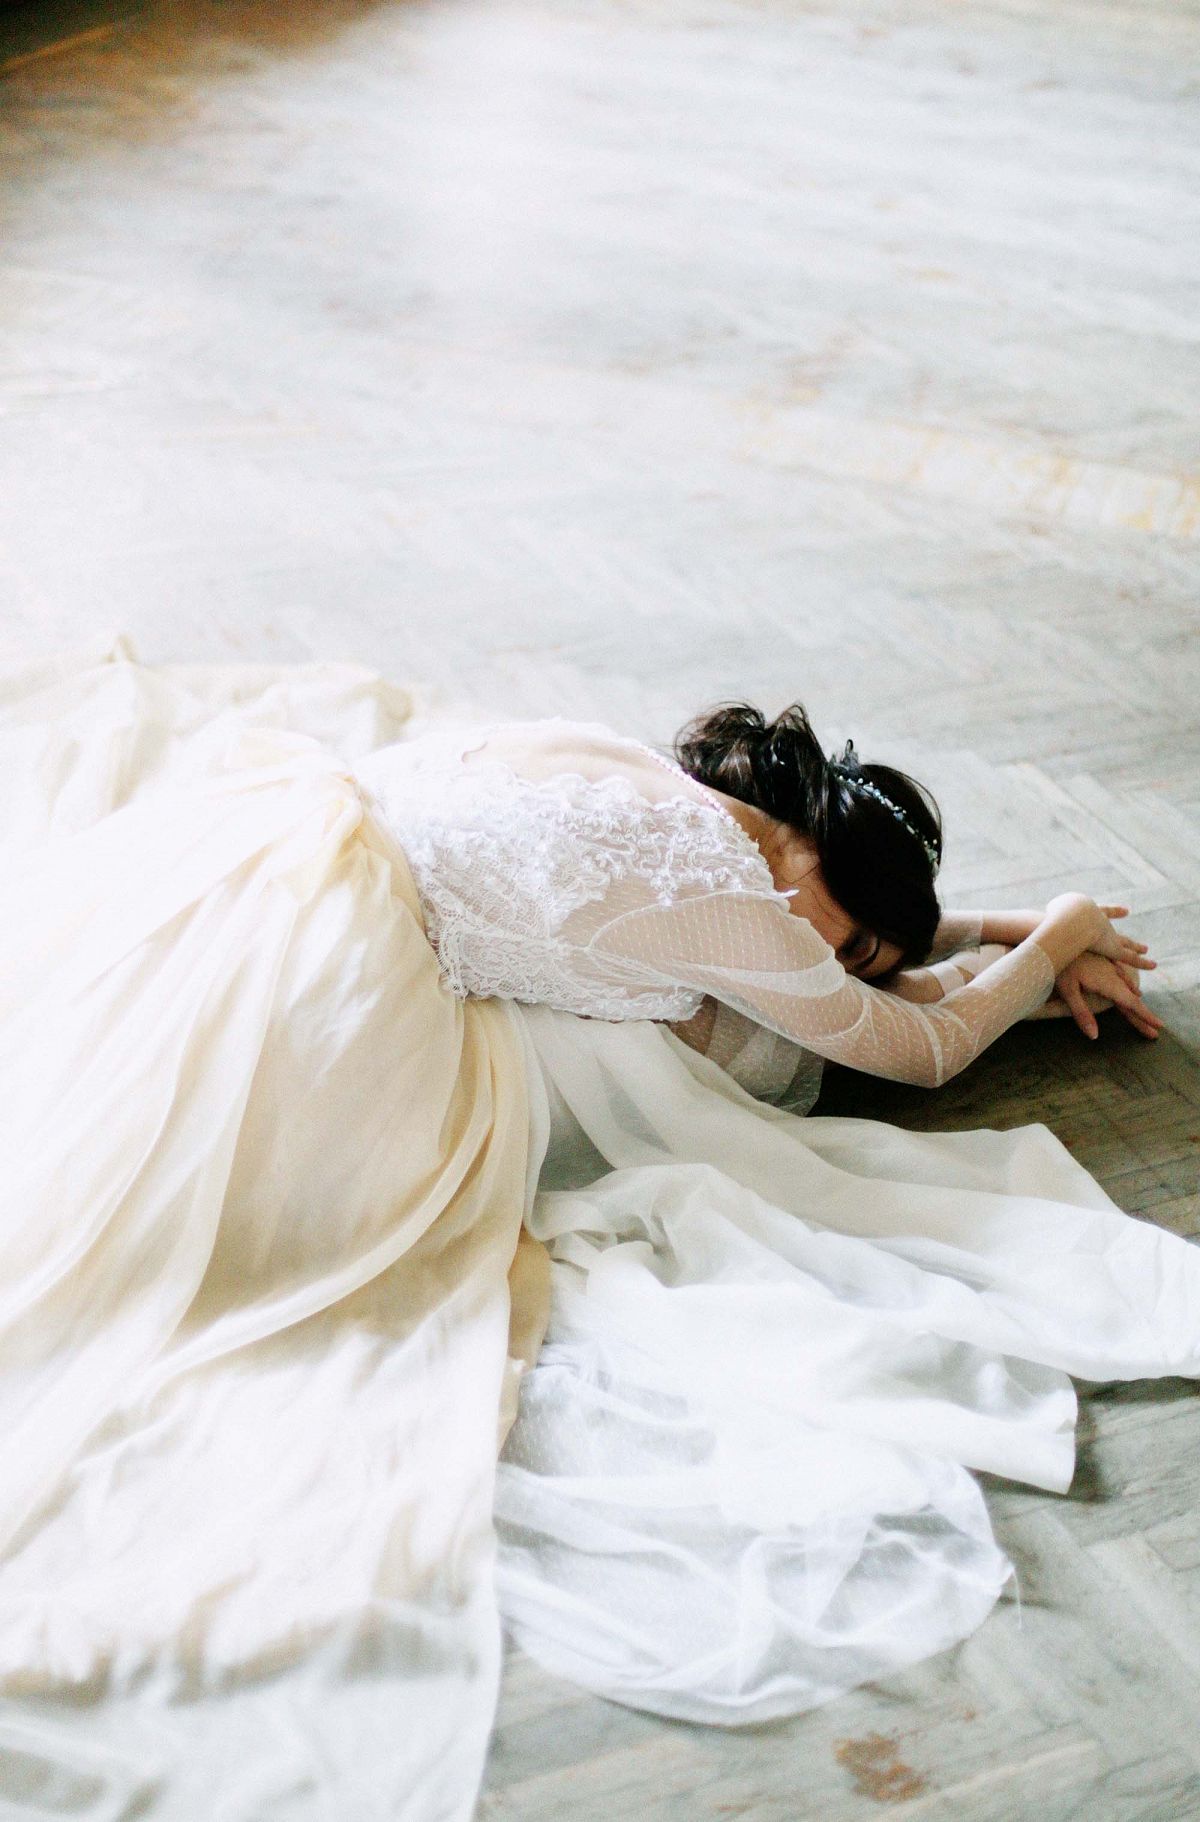 Graceful Movement Captured on Film - Ballerina Bride